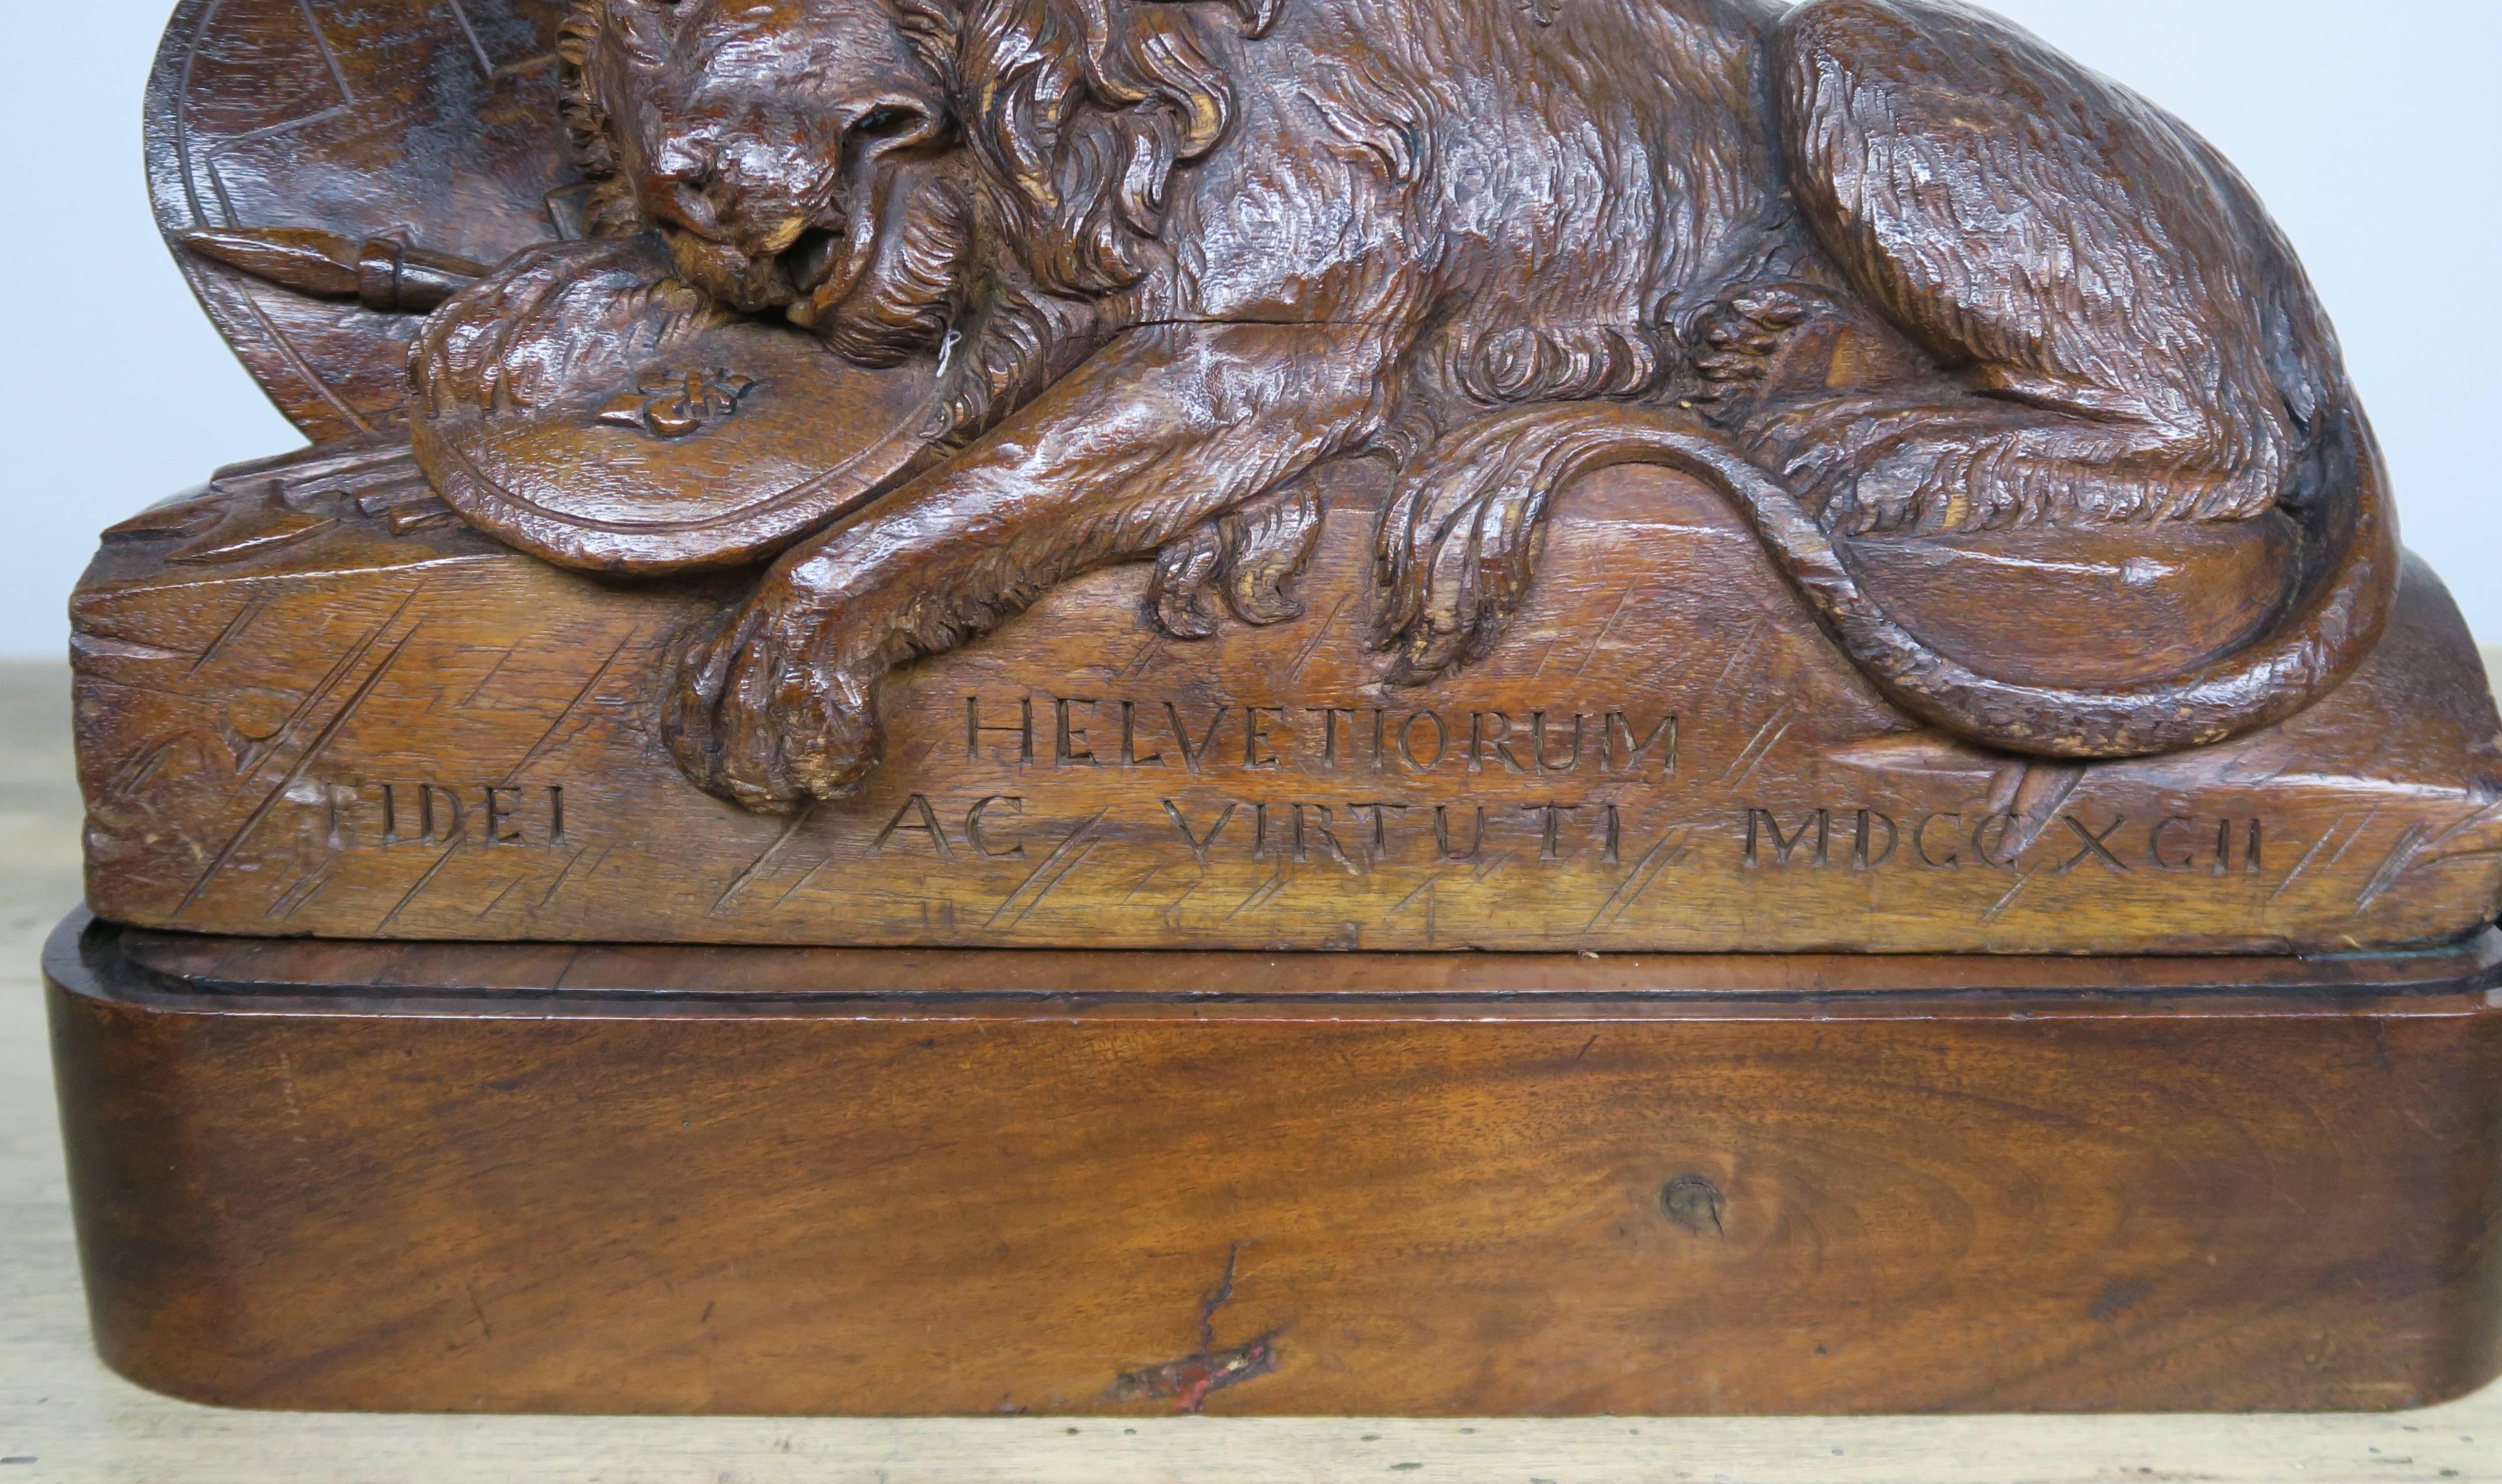 Baroque Carved Wood Lion-Copy of Original Monument in Lucerne